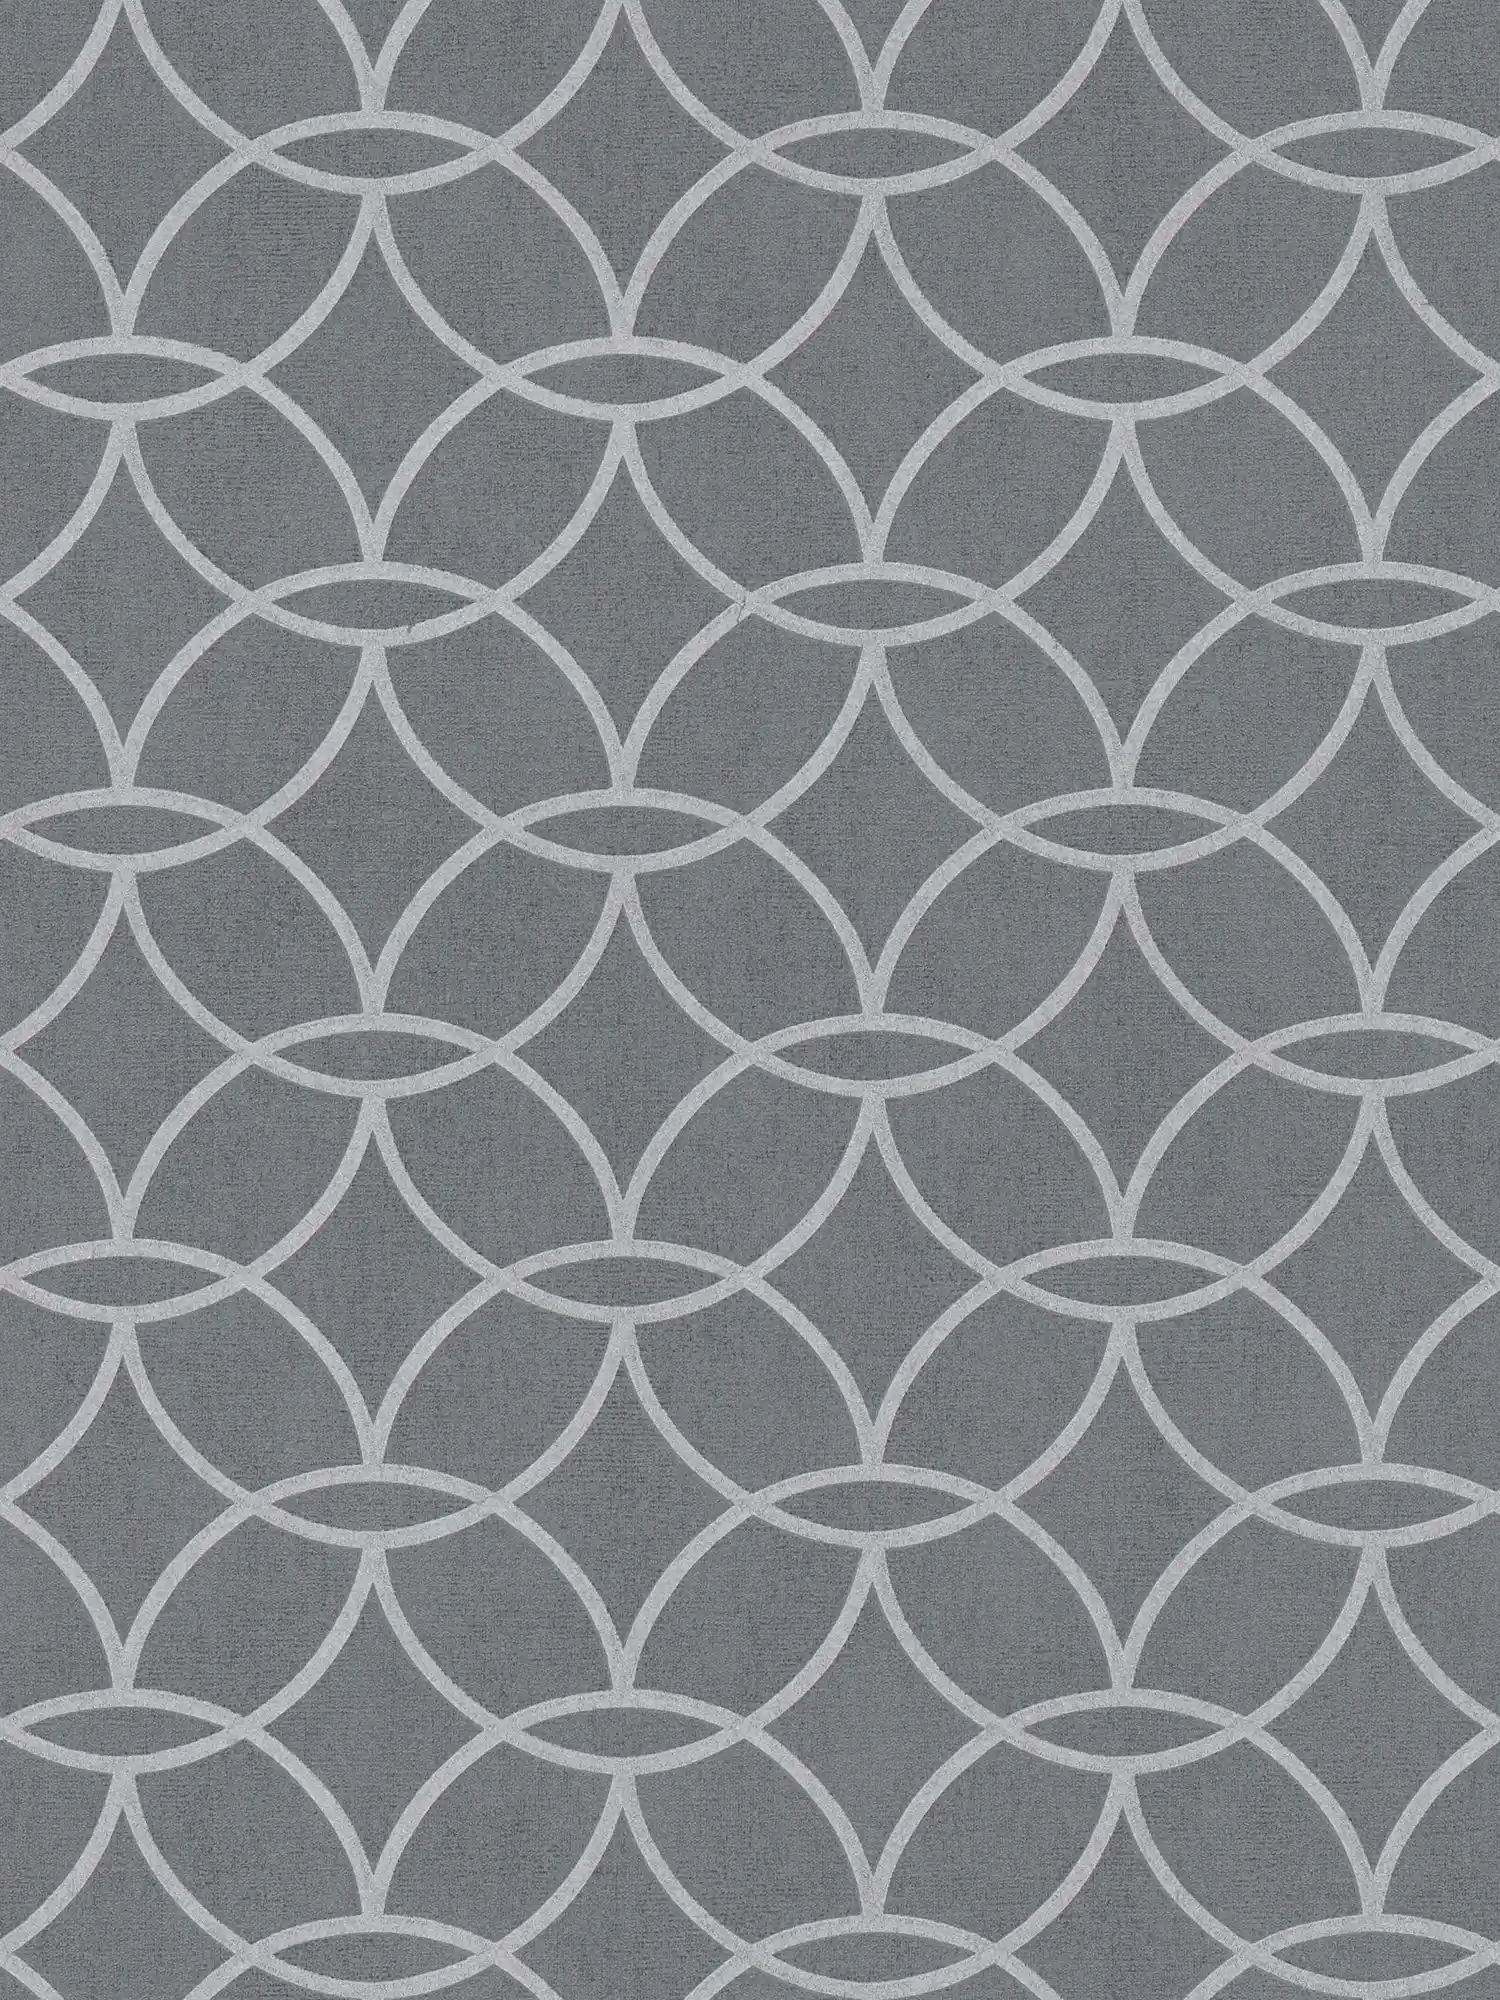 Grey pattern wallpaper with silver metallic pattern & shimmer effect - grey, metallic
